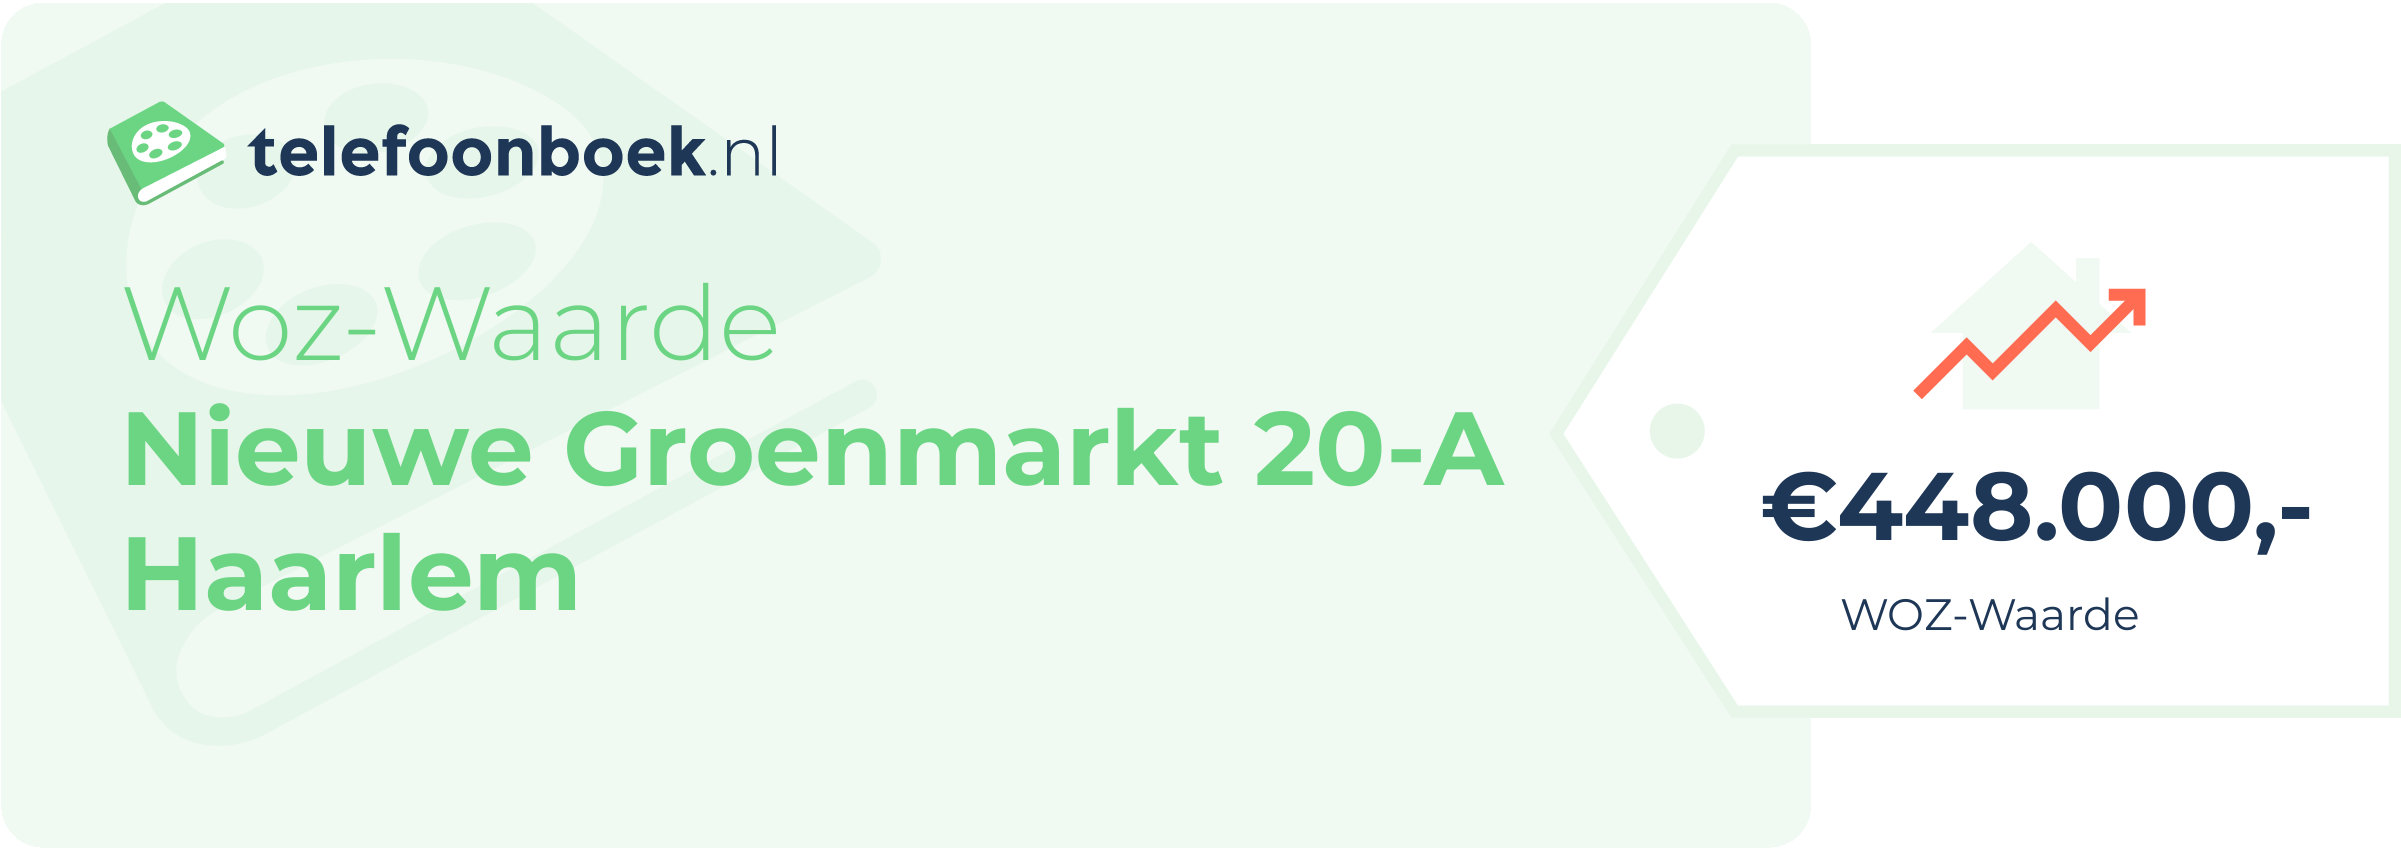 WOZ-waarde Nieuwe Groenmarkt 20-A Haarlem